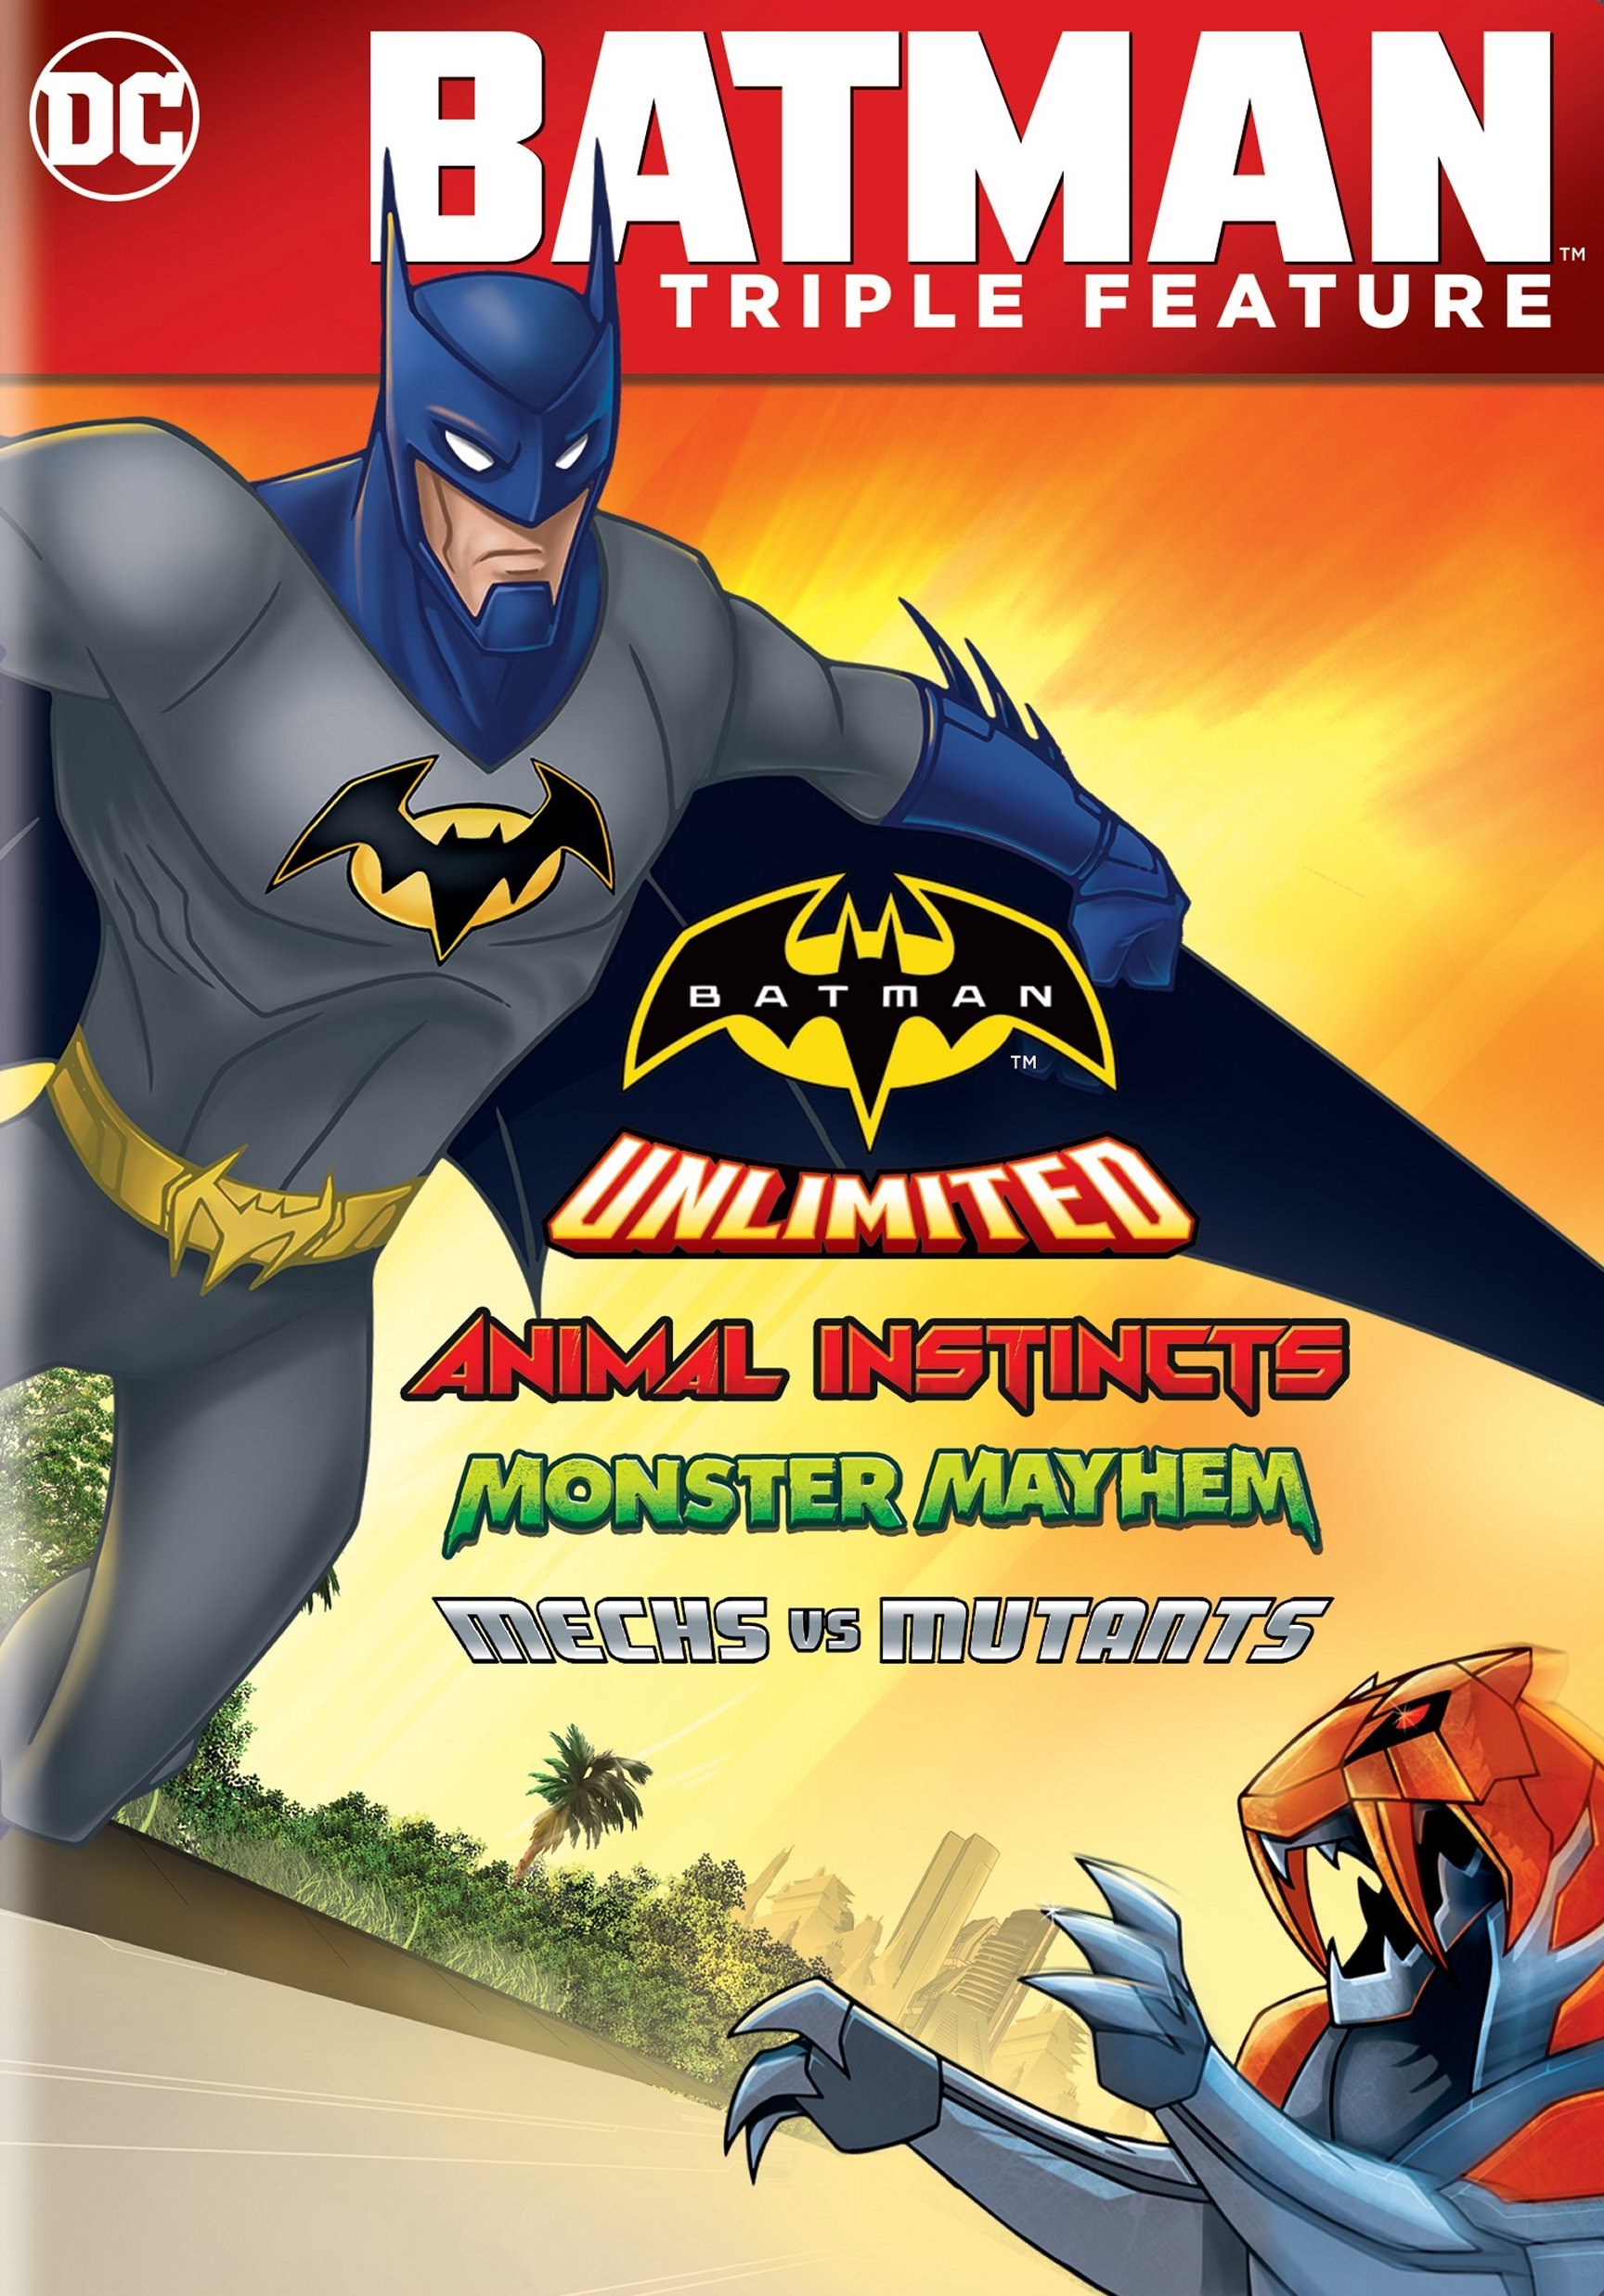 Batman Unlimited: Animal Instincts/Monster Mayhem/Mechs vs Mutants [DVD] -  Best Buy